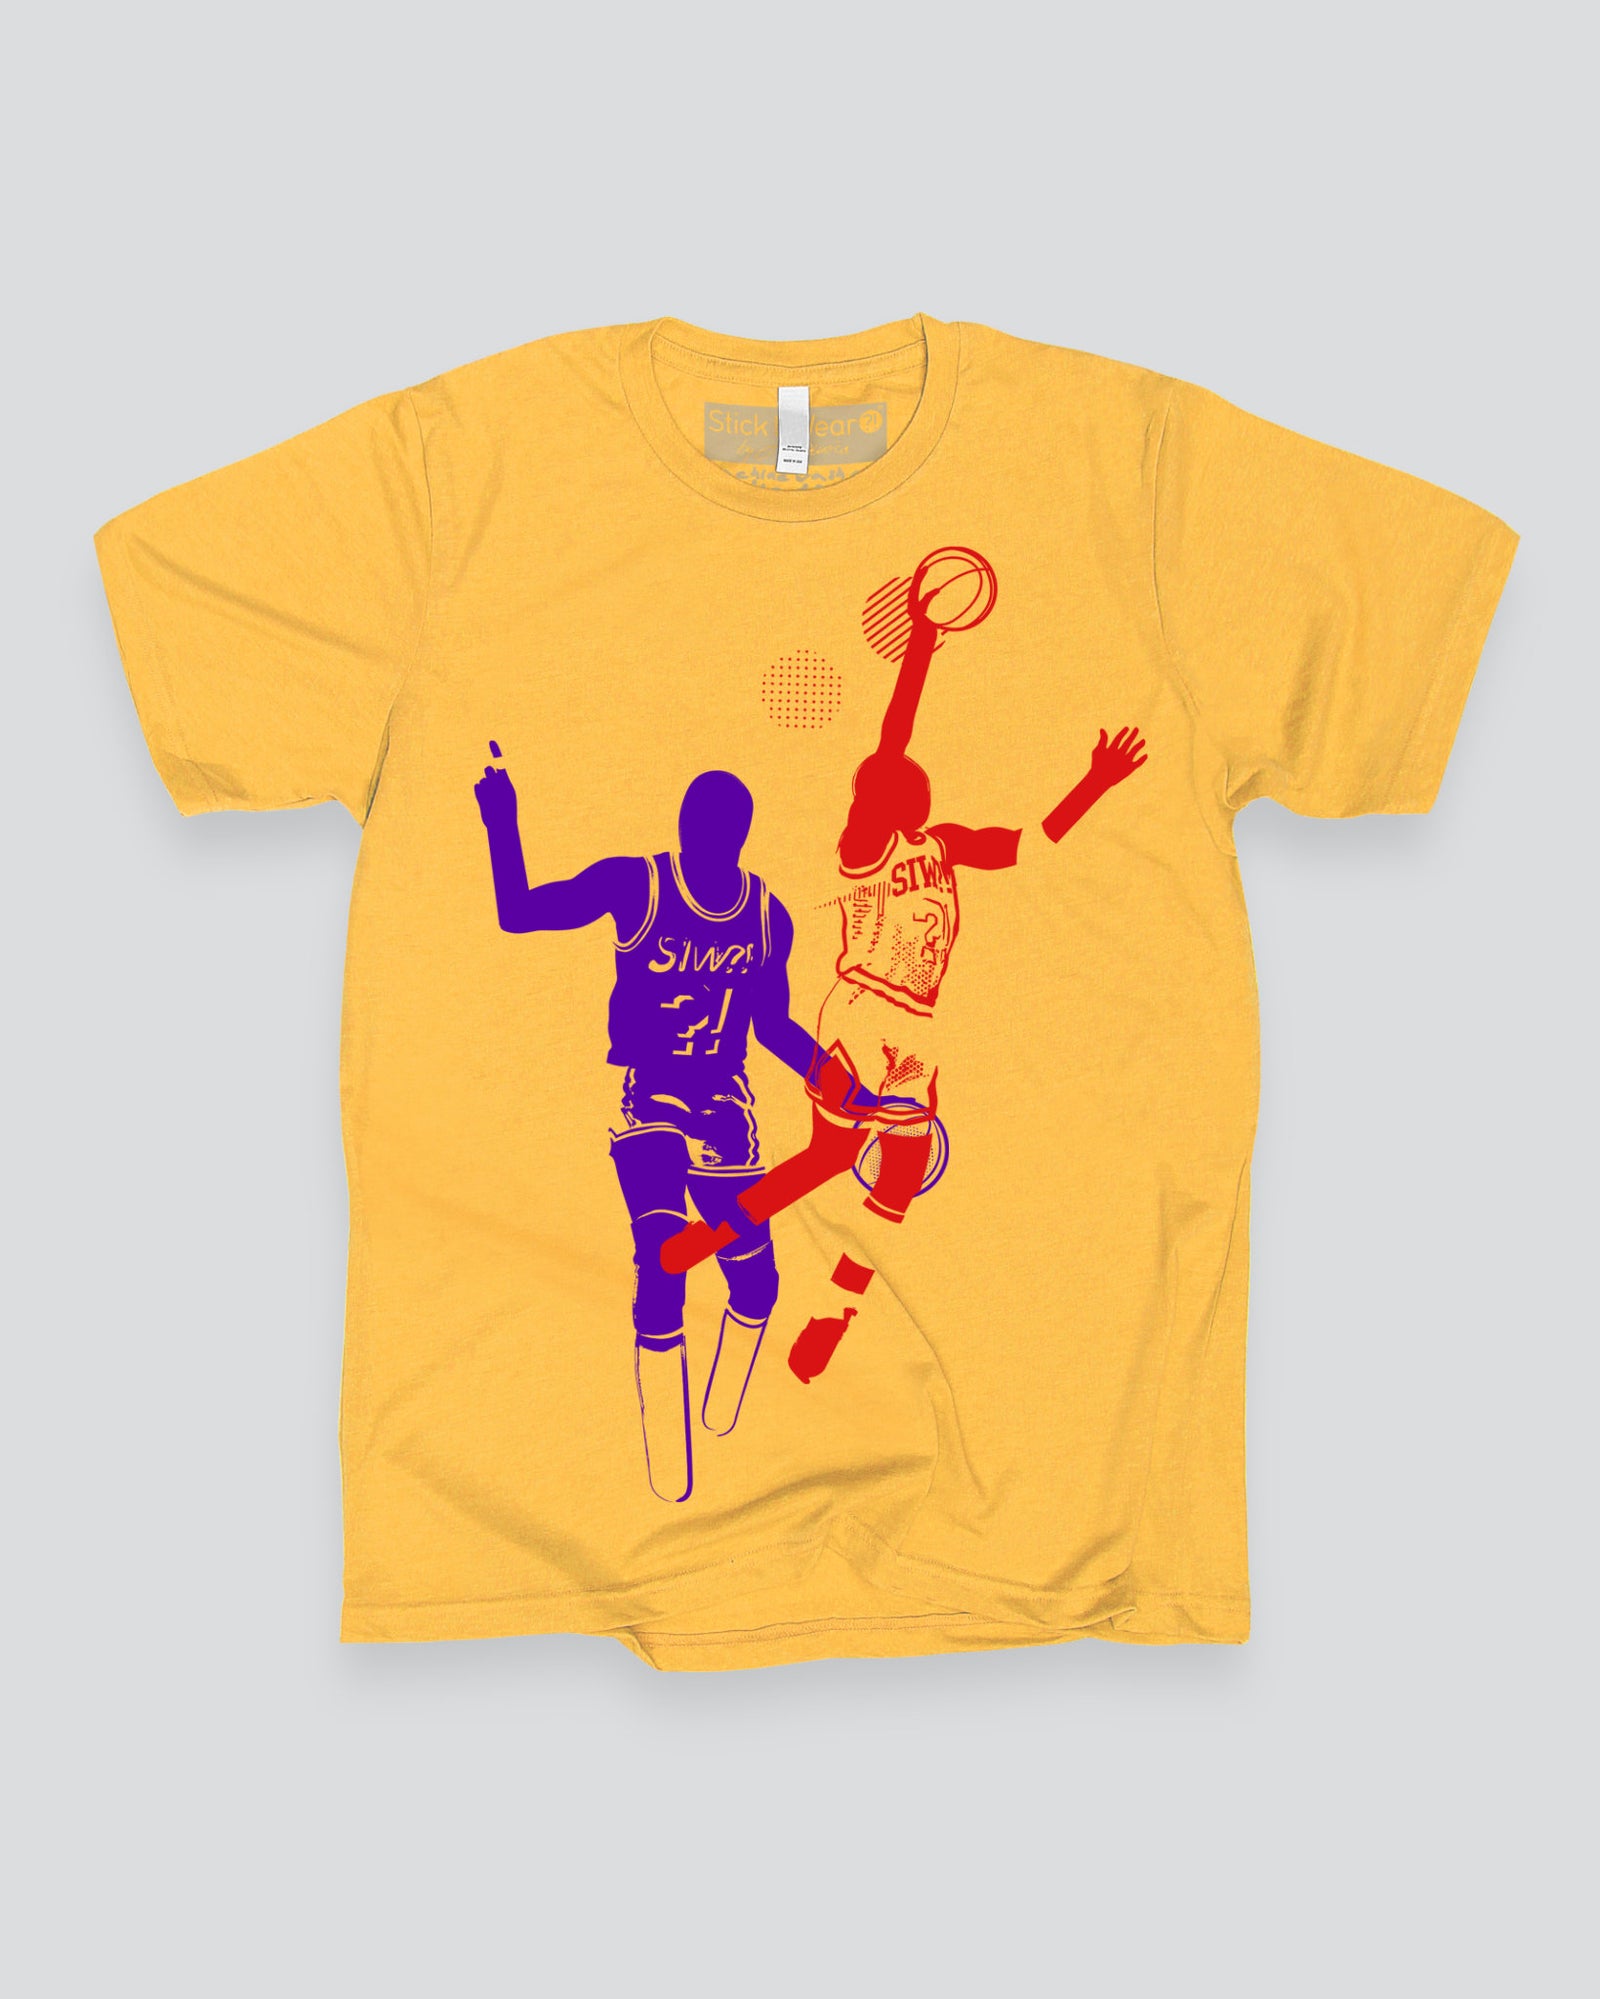 It Apparel Sports Stick Fashion Basketball | Wear?!